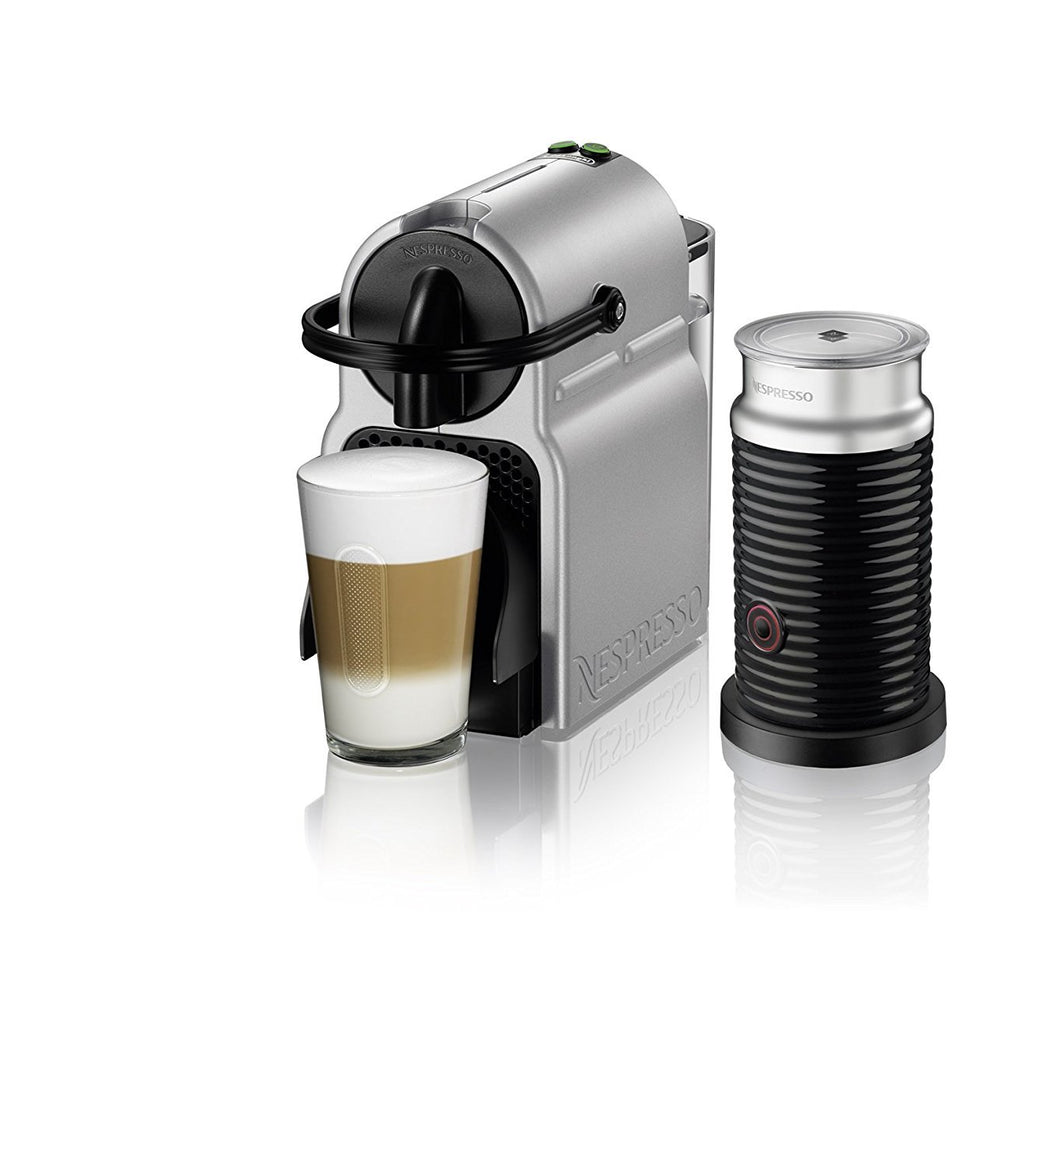  Nespresso Inissia Espresso Machine by De'Longhi with